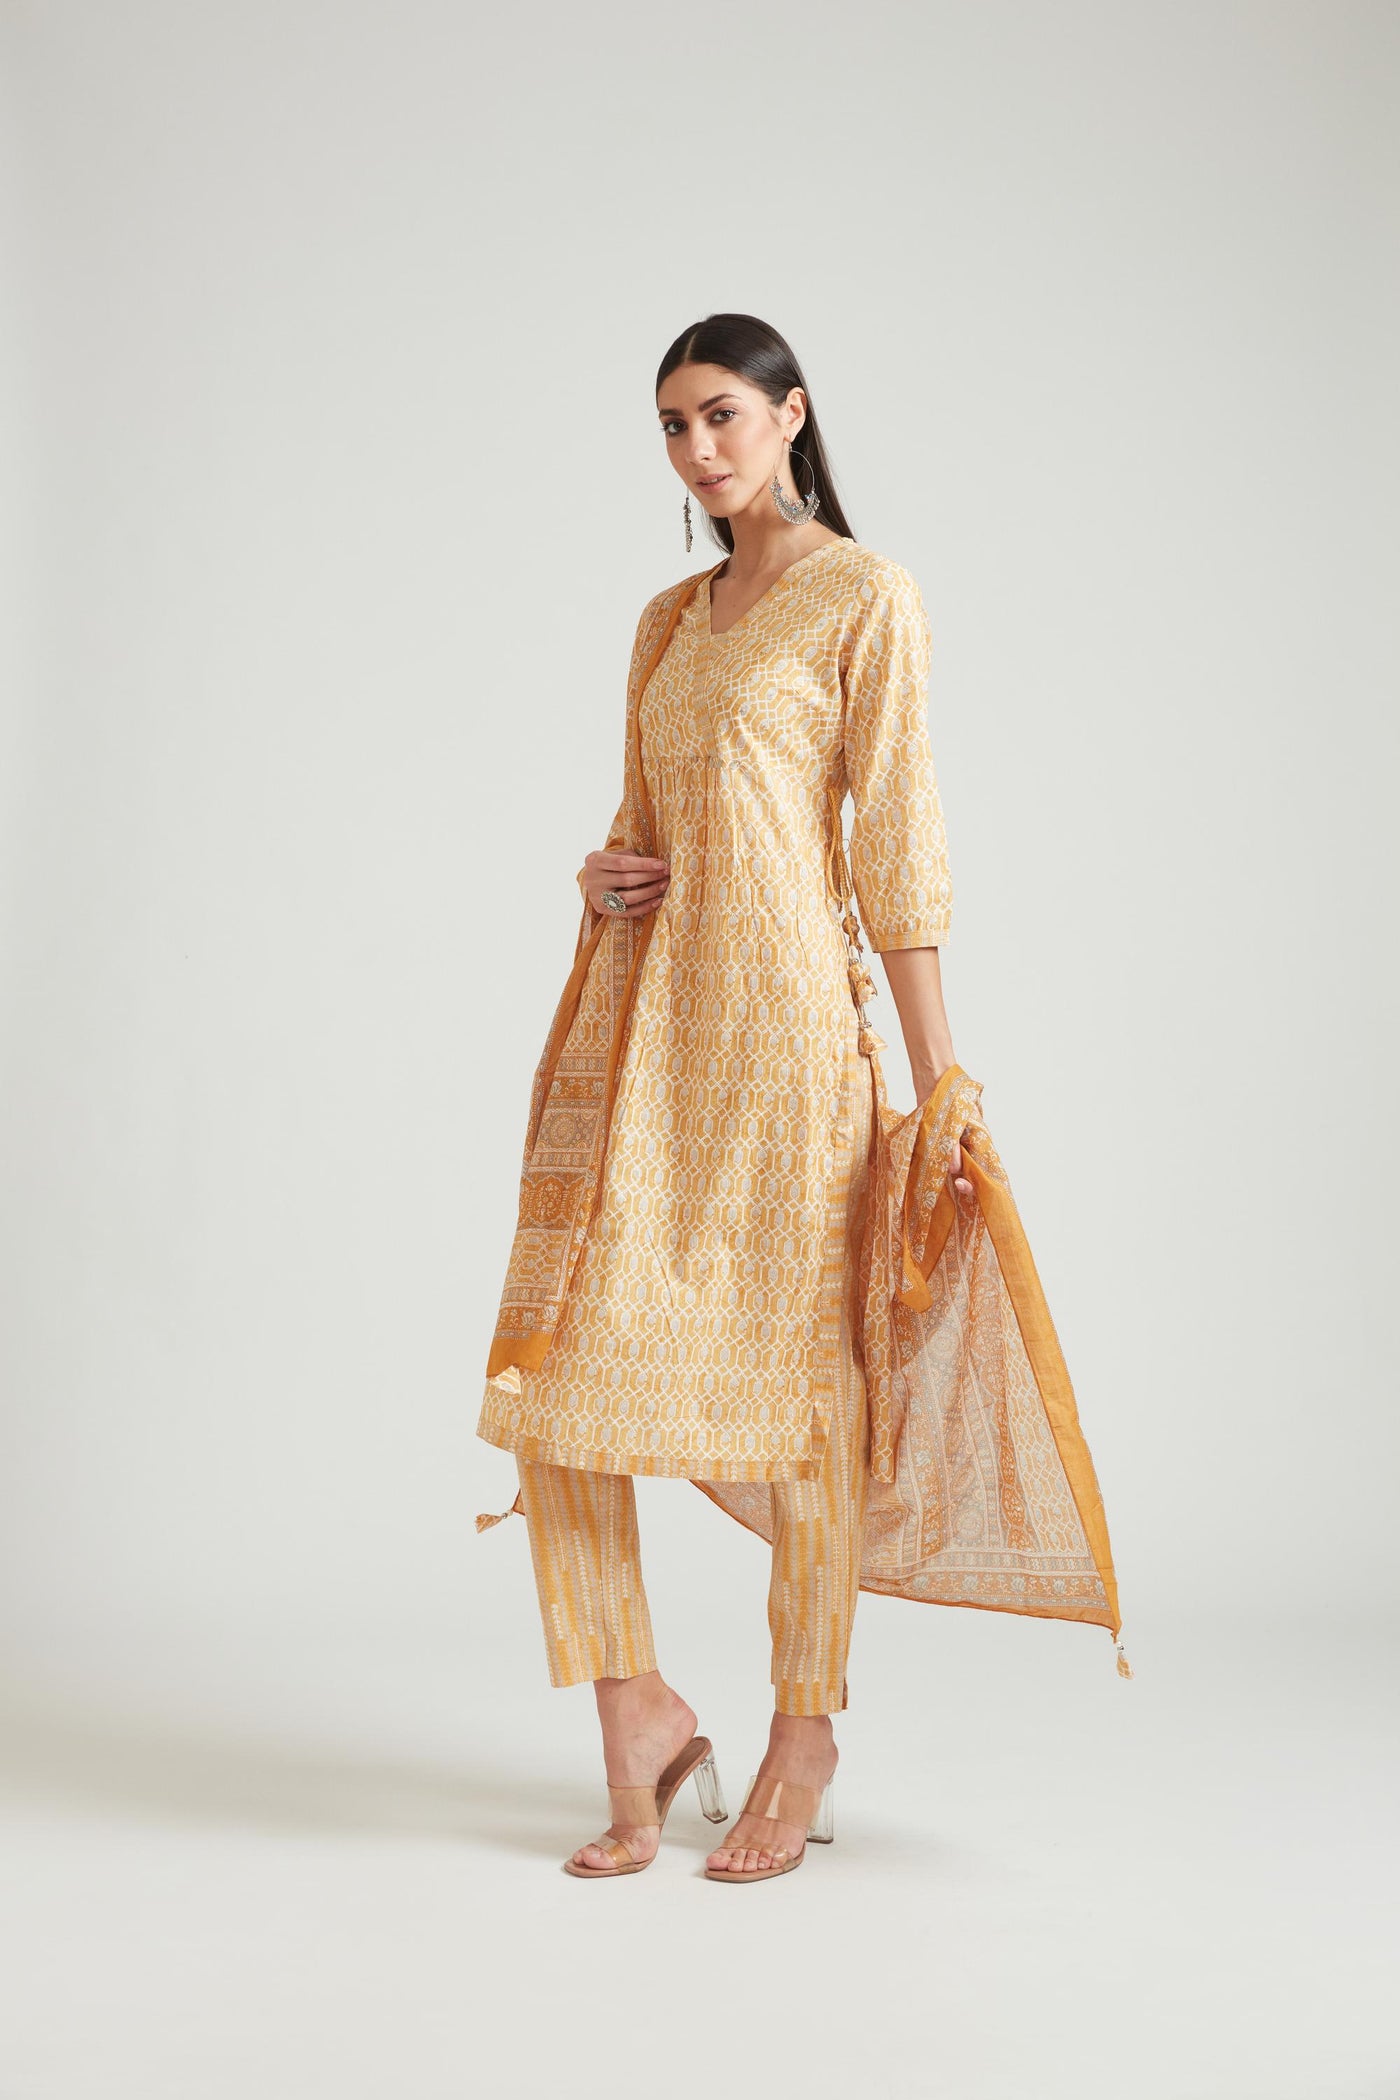 Neeru's Mustard Color Muslin Fabric Salwar Kameez